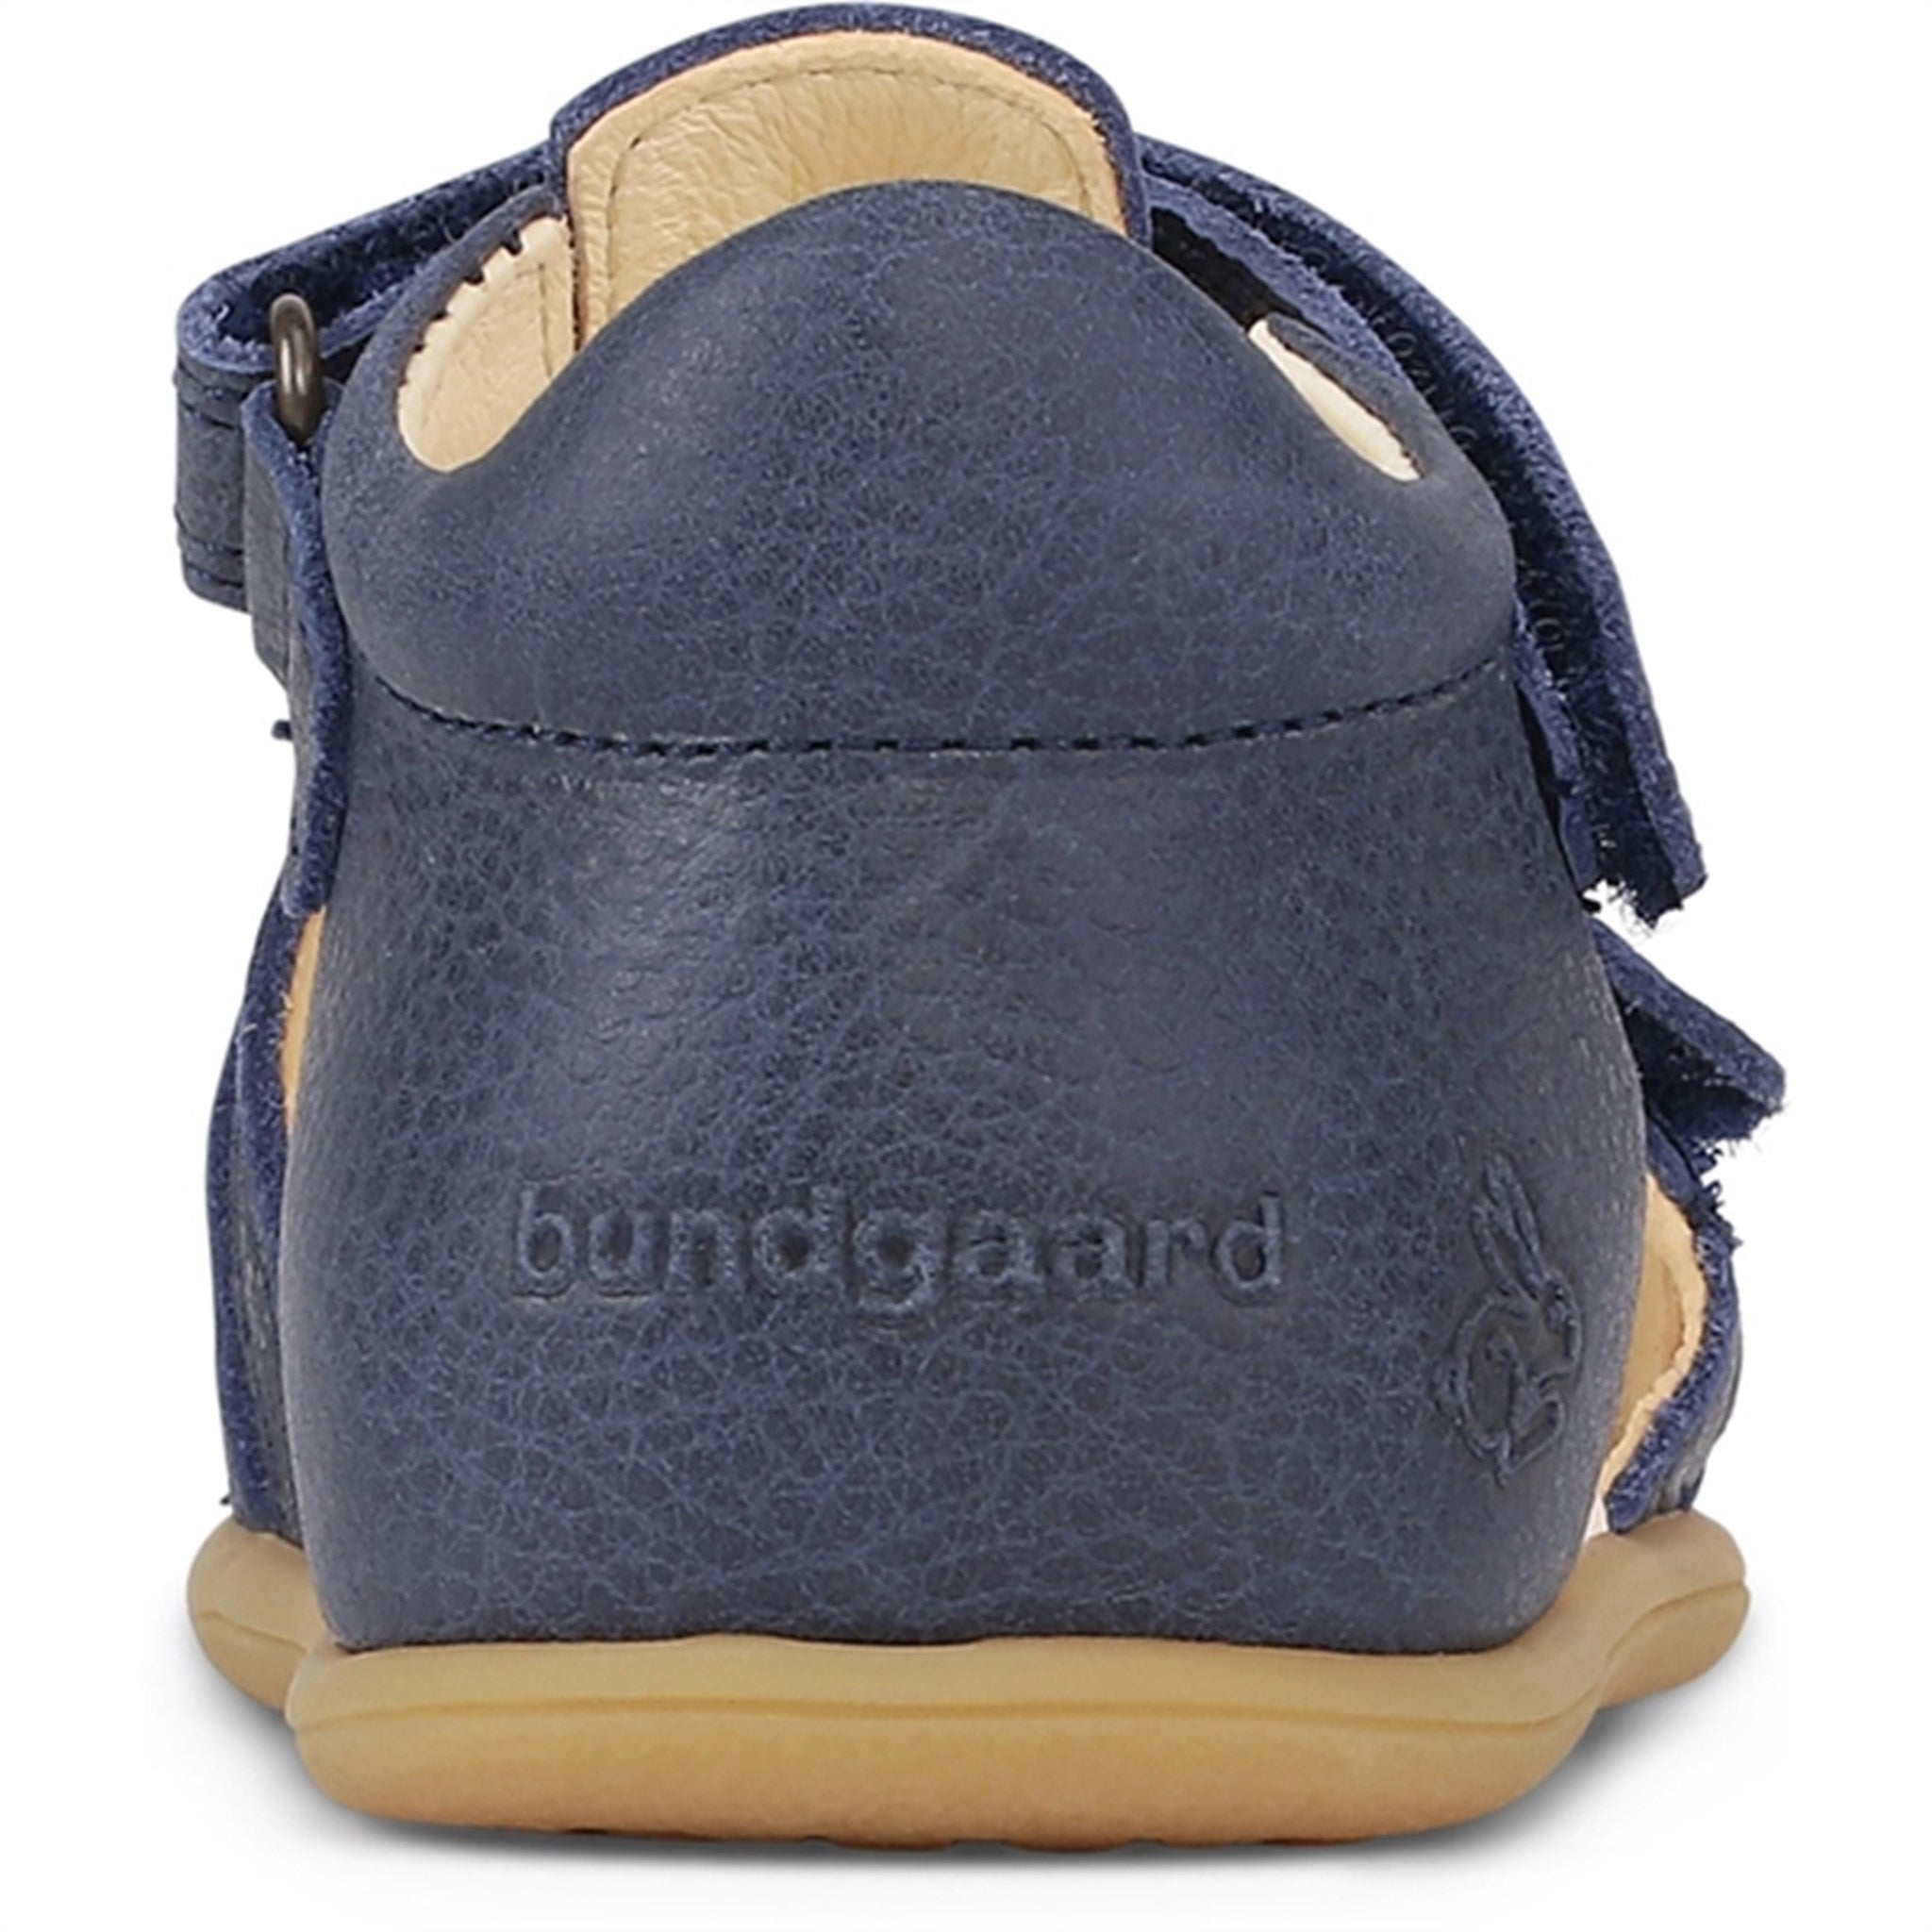 Bundgaard Rox IV Sandal Navy G 5